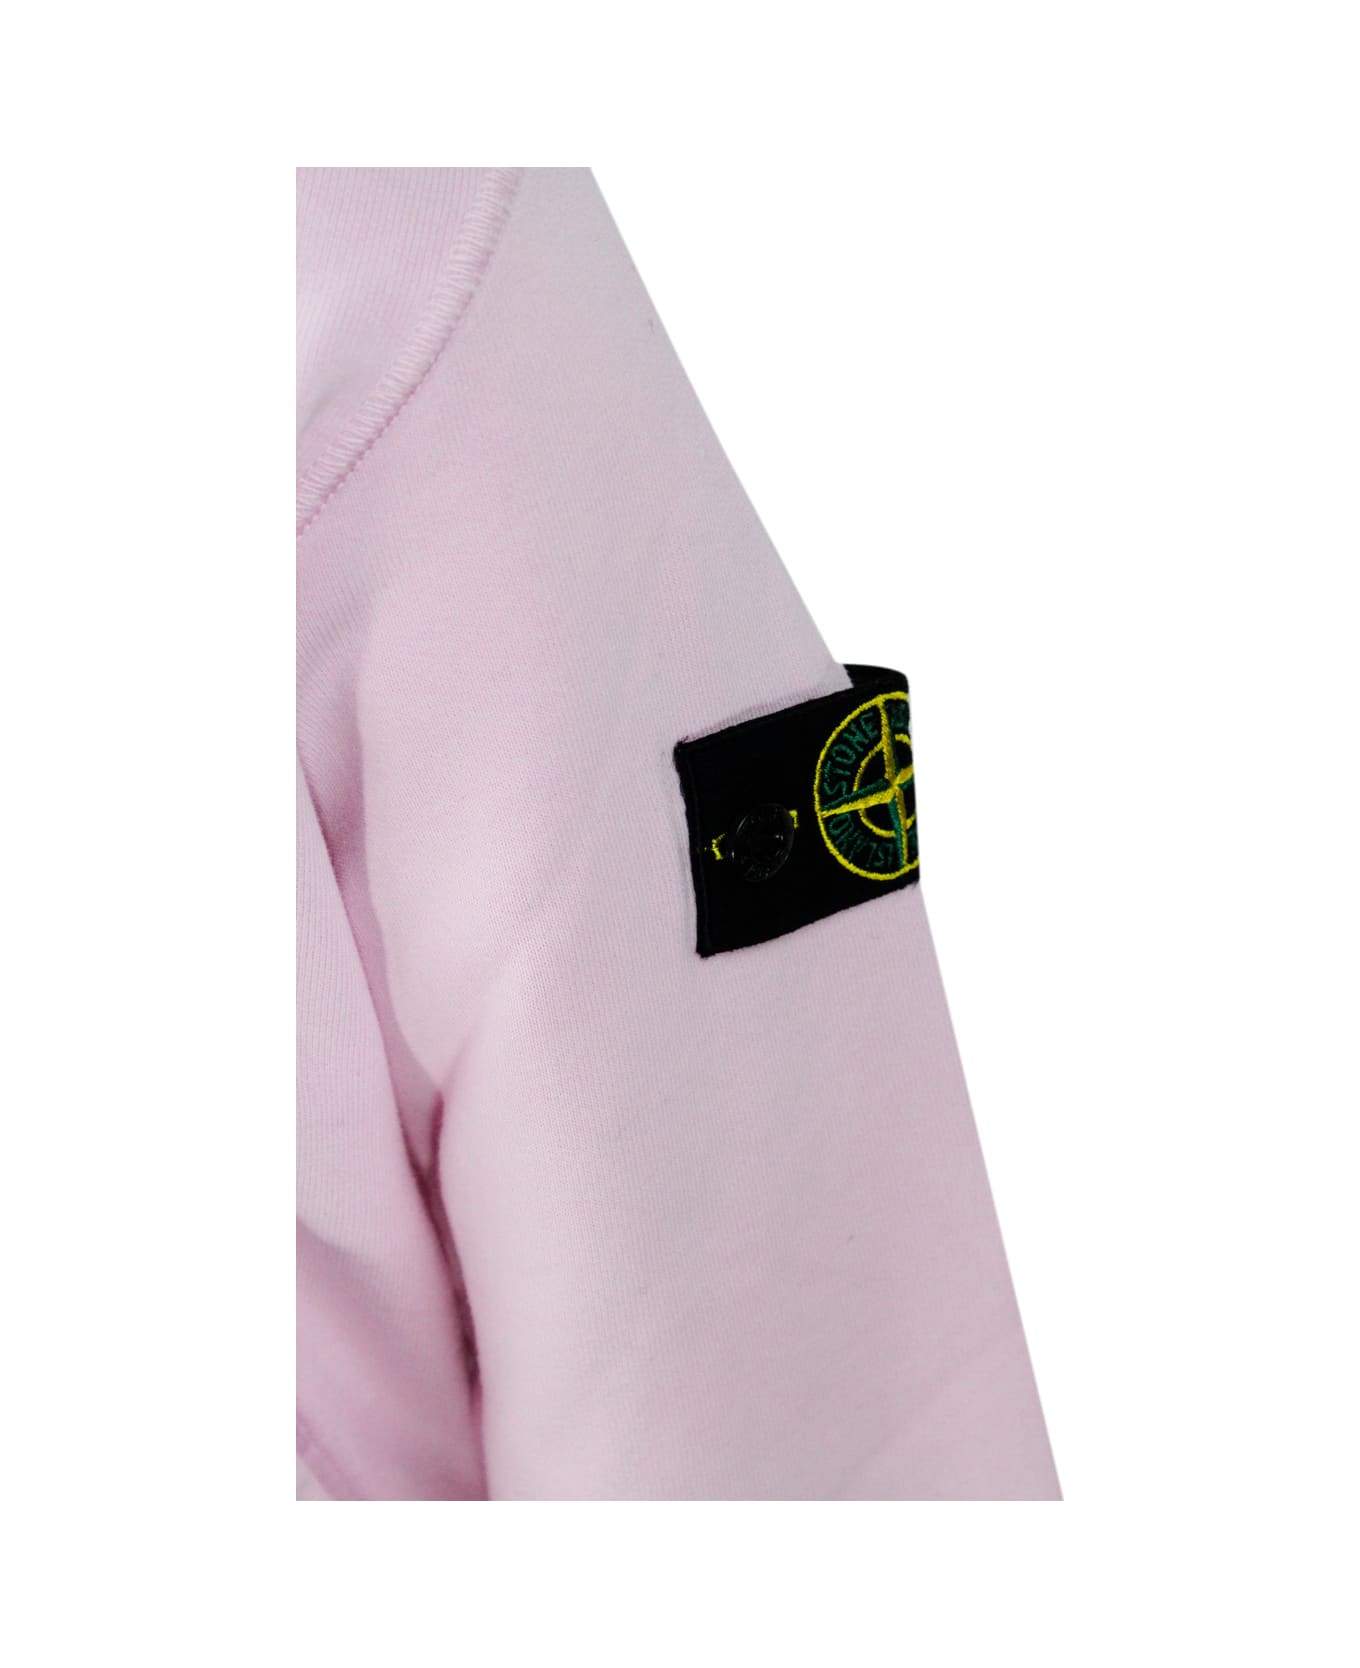 Stone Island Cotton Sweatshirt With Hood, Kangaroo Pockets And Logo On The Sleeve - Pink ニットウェア＆スウェットシャツ